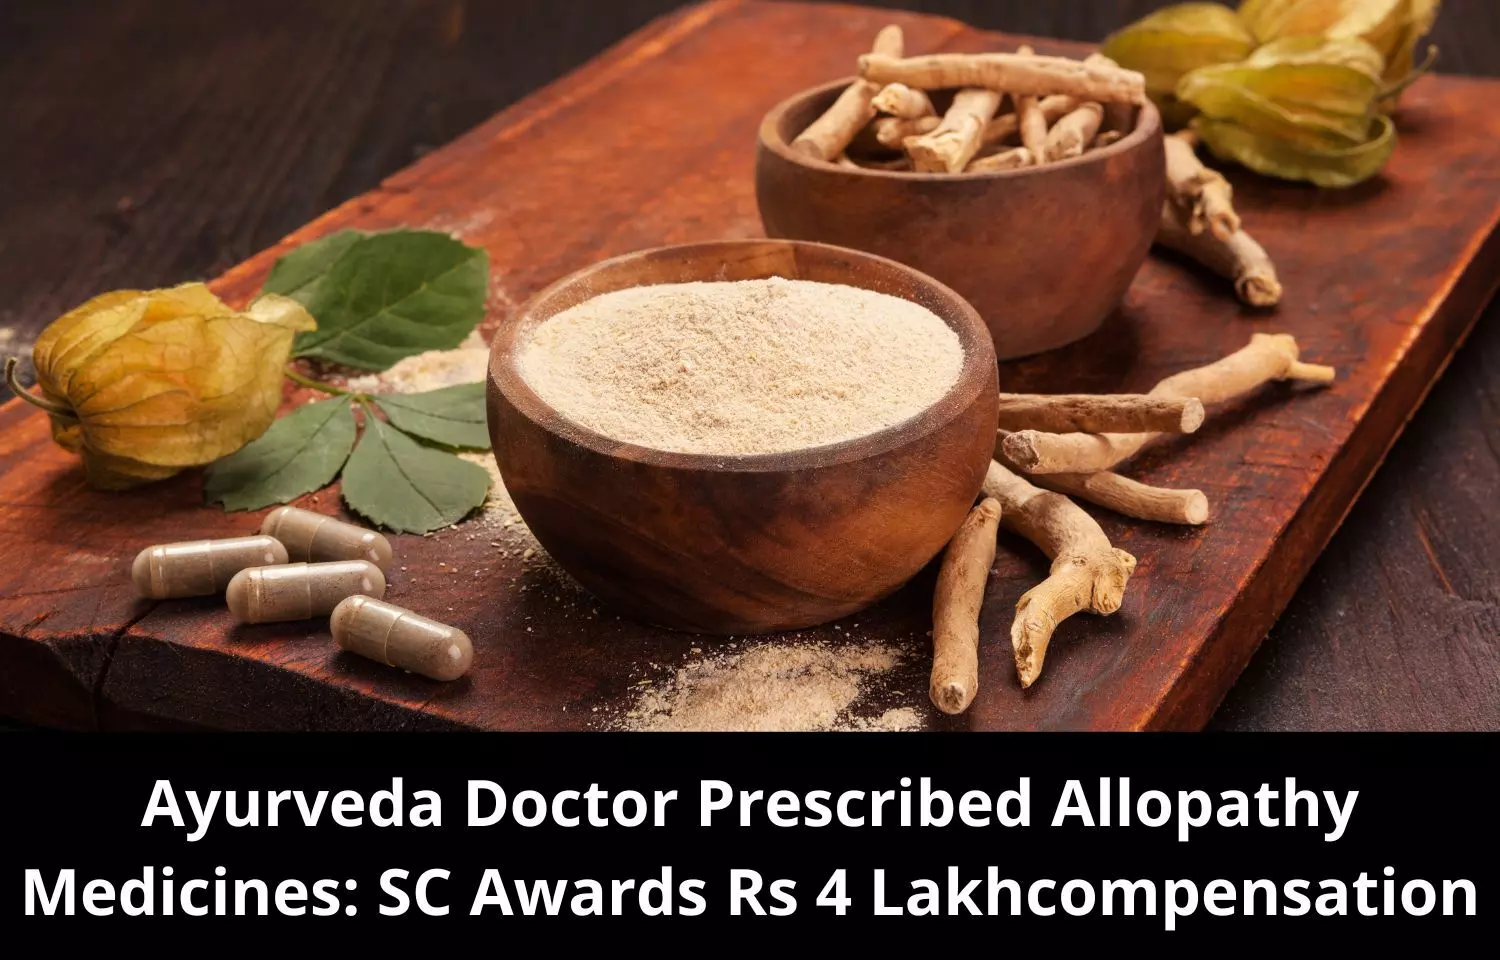 Ayurveda doctor prescribed allopathy medicines: SC sets aside NCDRC order Of Rs 10 lakh compensation, awards Rs 4 lakh instead